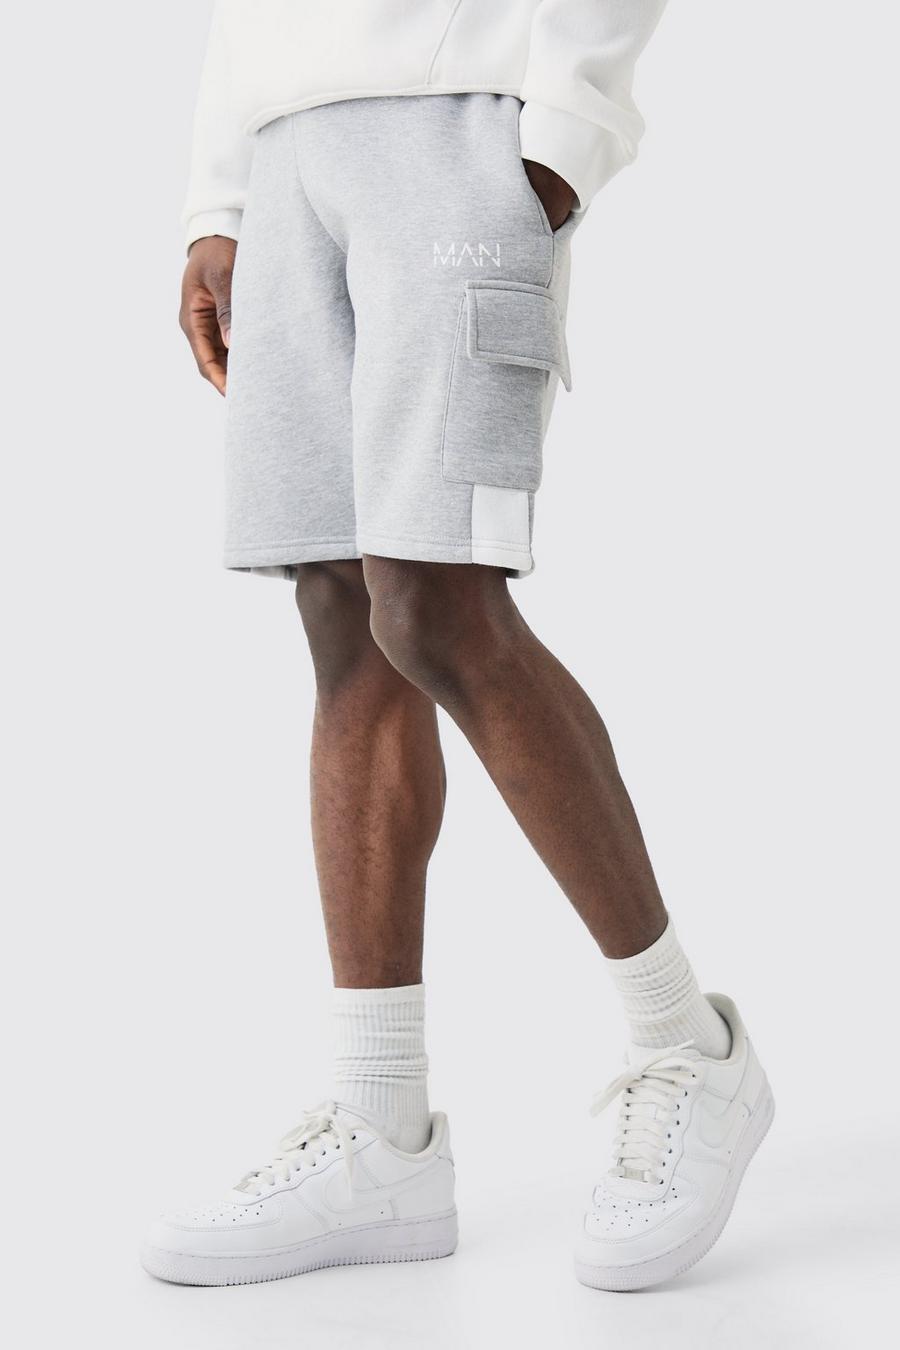 Grey Man Gusset Colour Block Pixel Camo Slim Mid Length Shorts